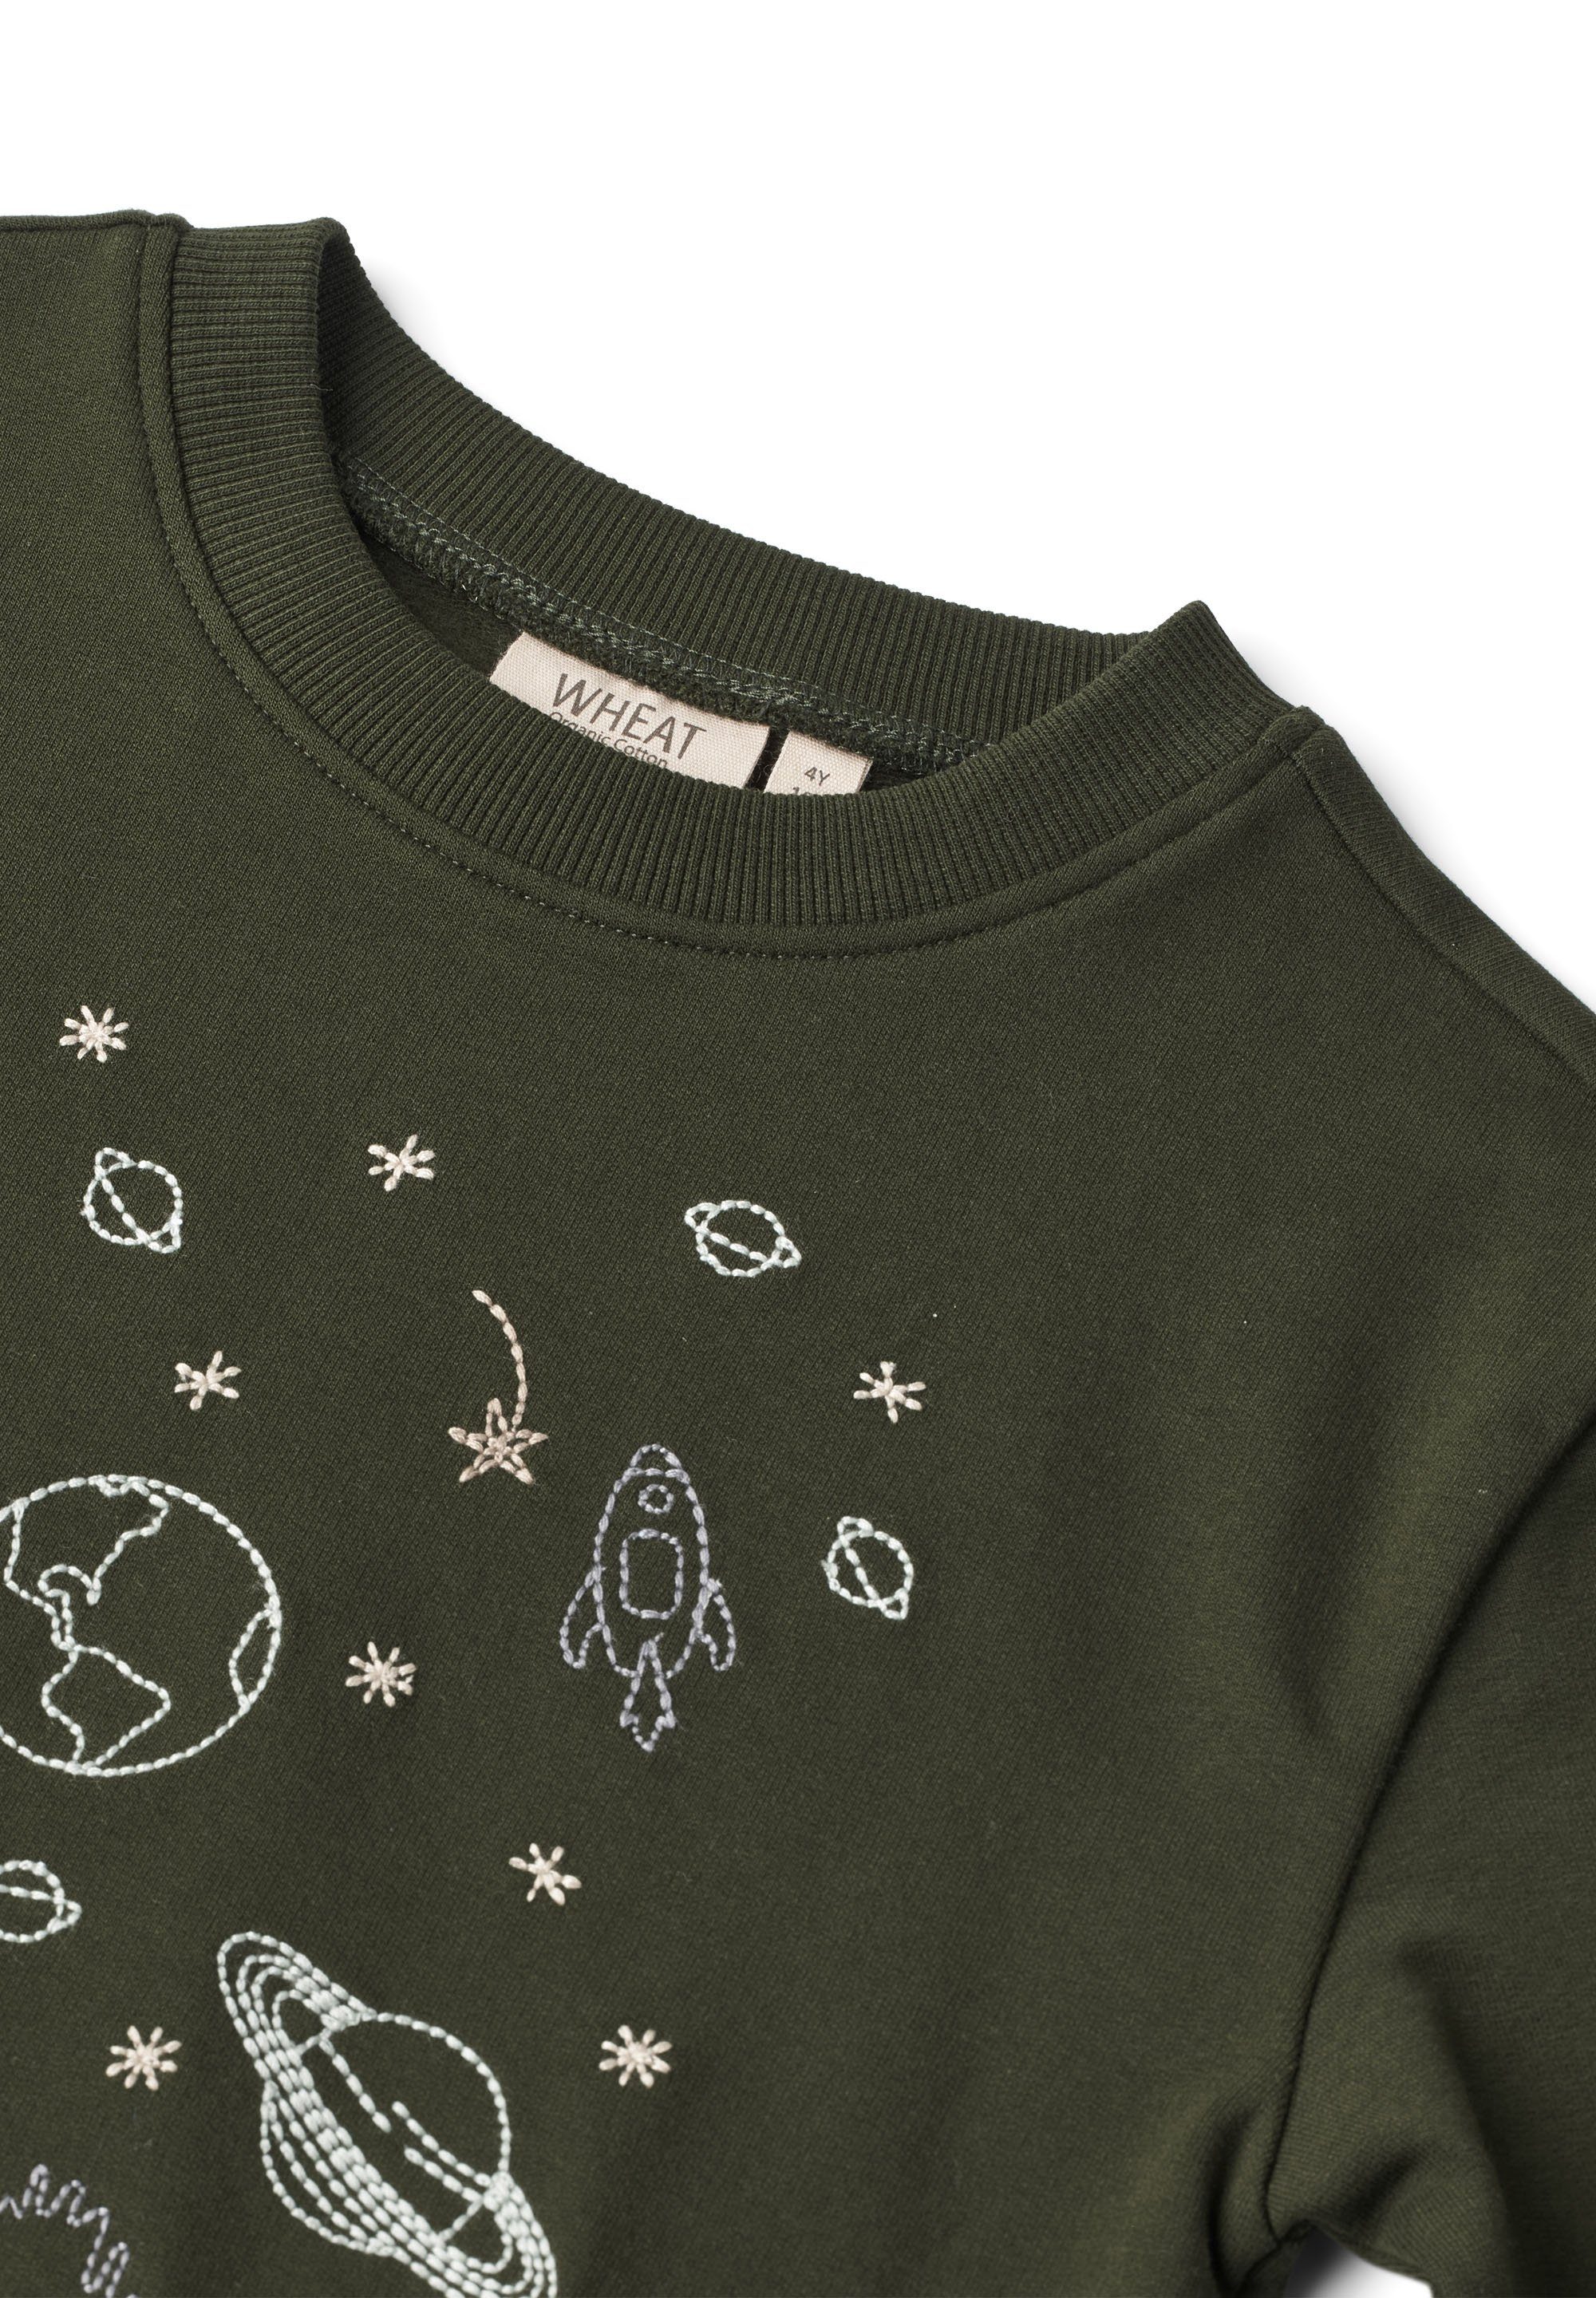 WHEAT Space Sweatshirt